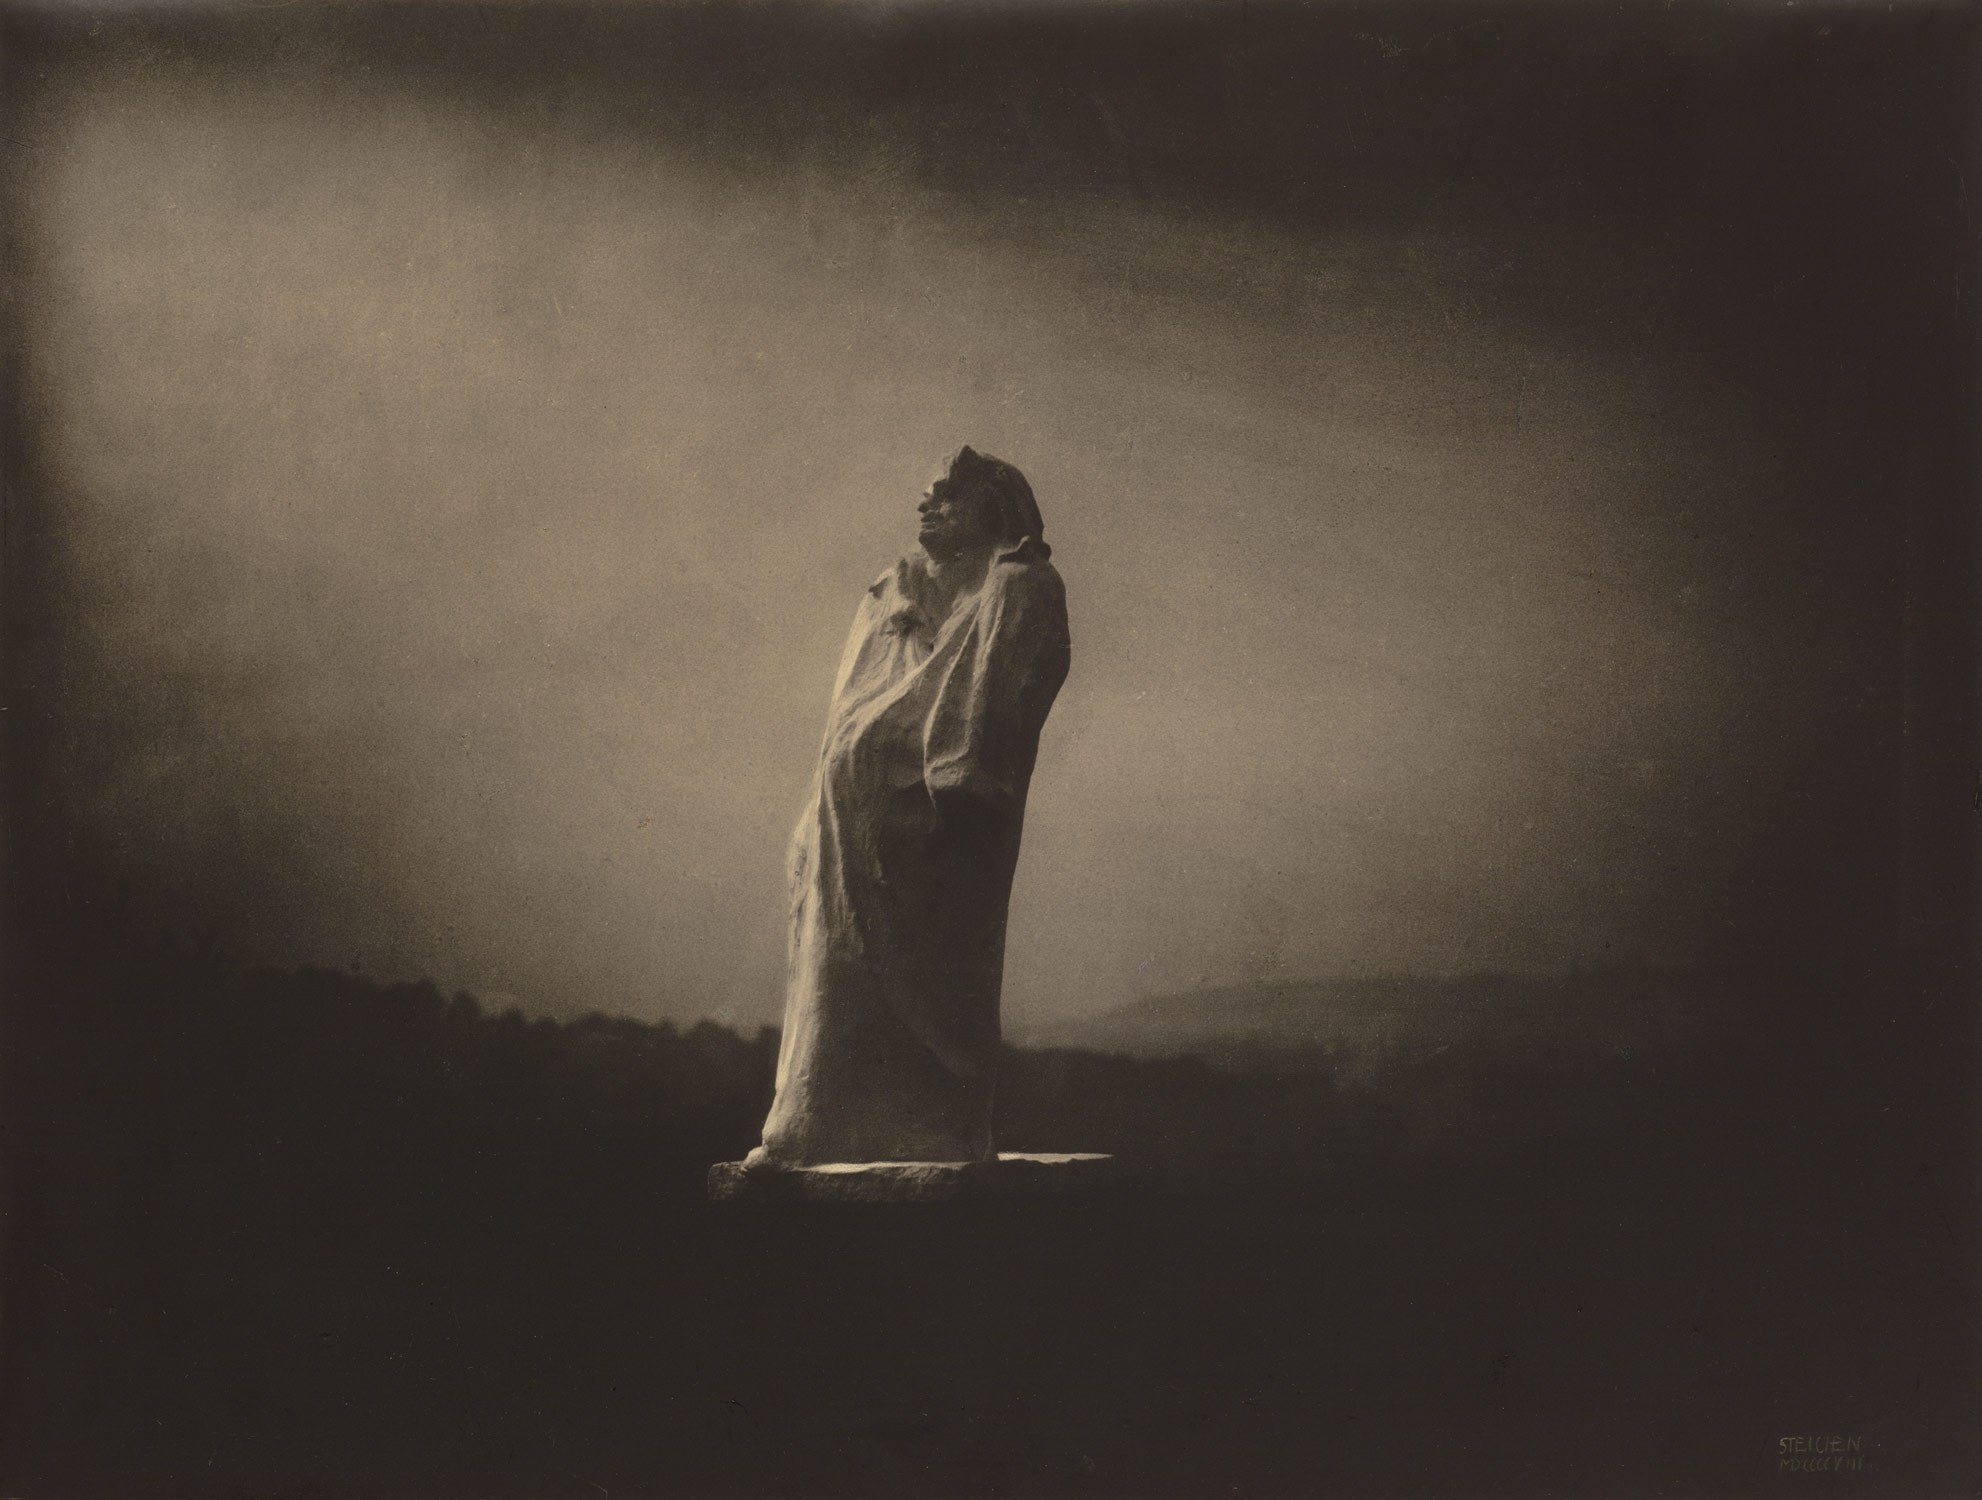 Edward J. Steichen Balzac, Towards the Light, Midnight 1908, Direct Carbon Print, © 2017 Artists Rights Society, New York, courtesy The Metropolitan Museum, New York